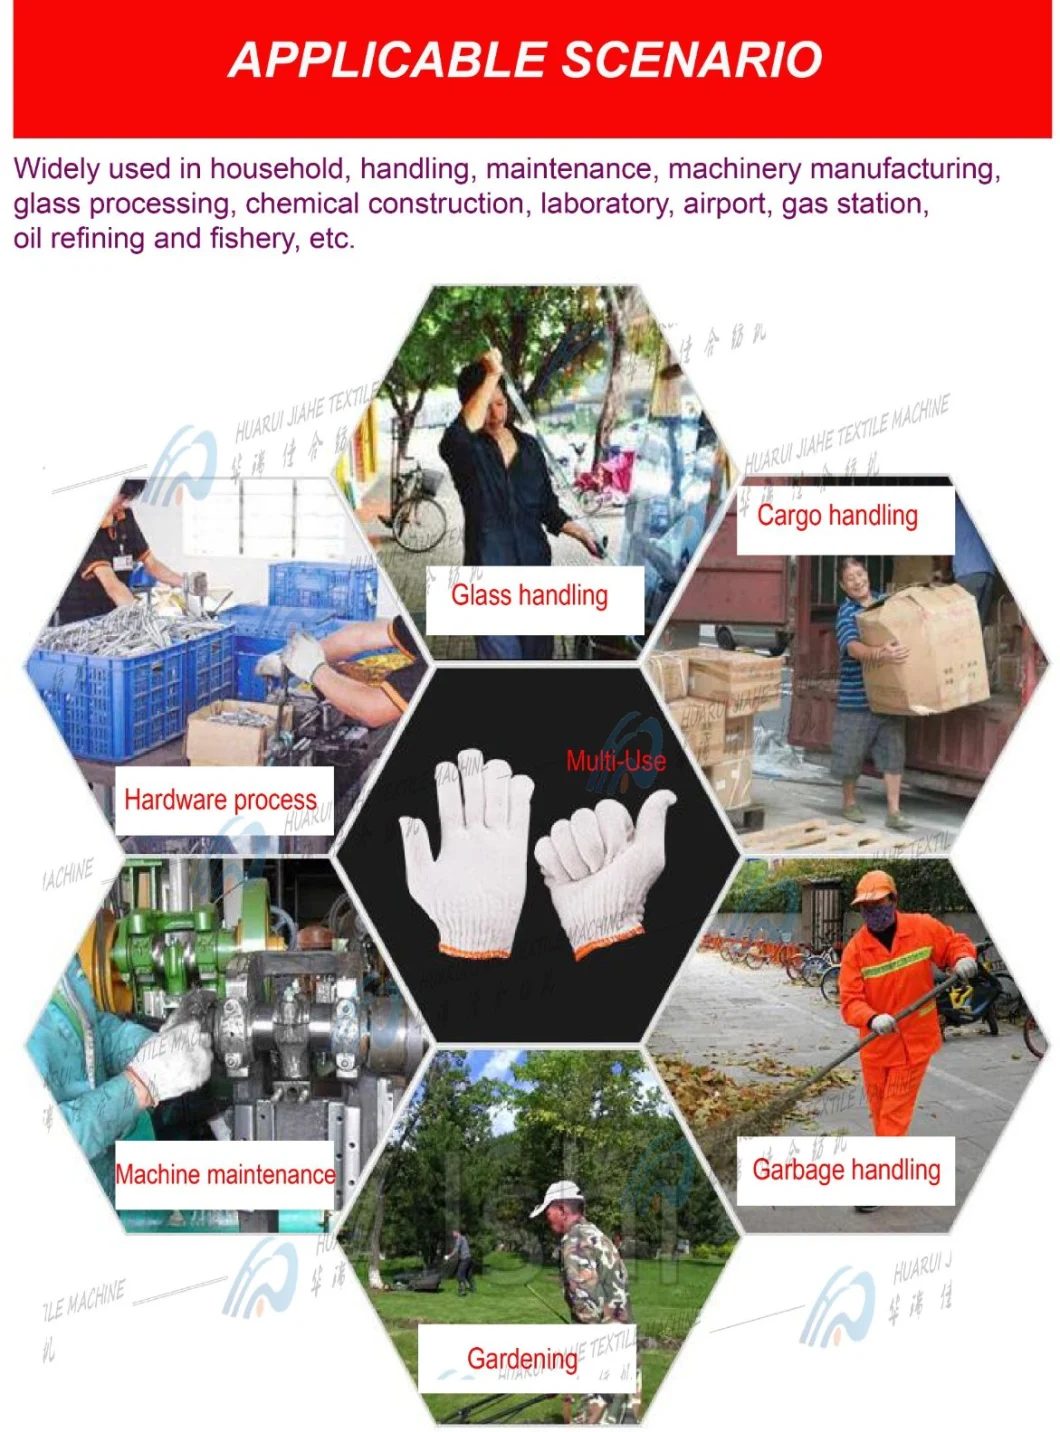 Wholesale White Cotton Yarn Working Hand Safety Gloves